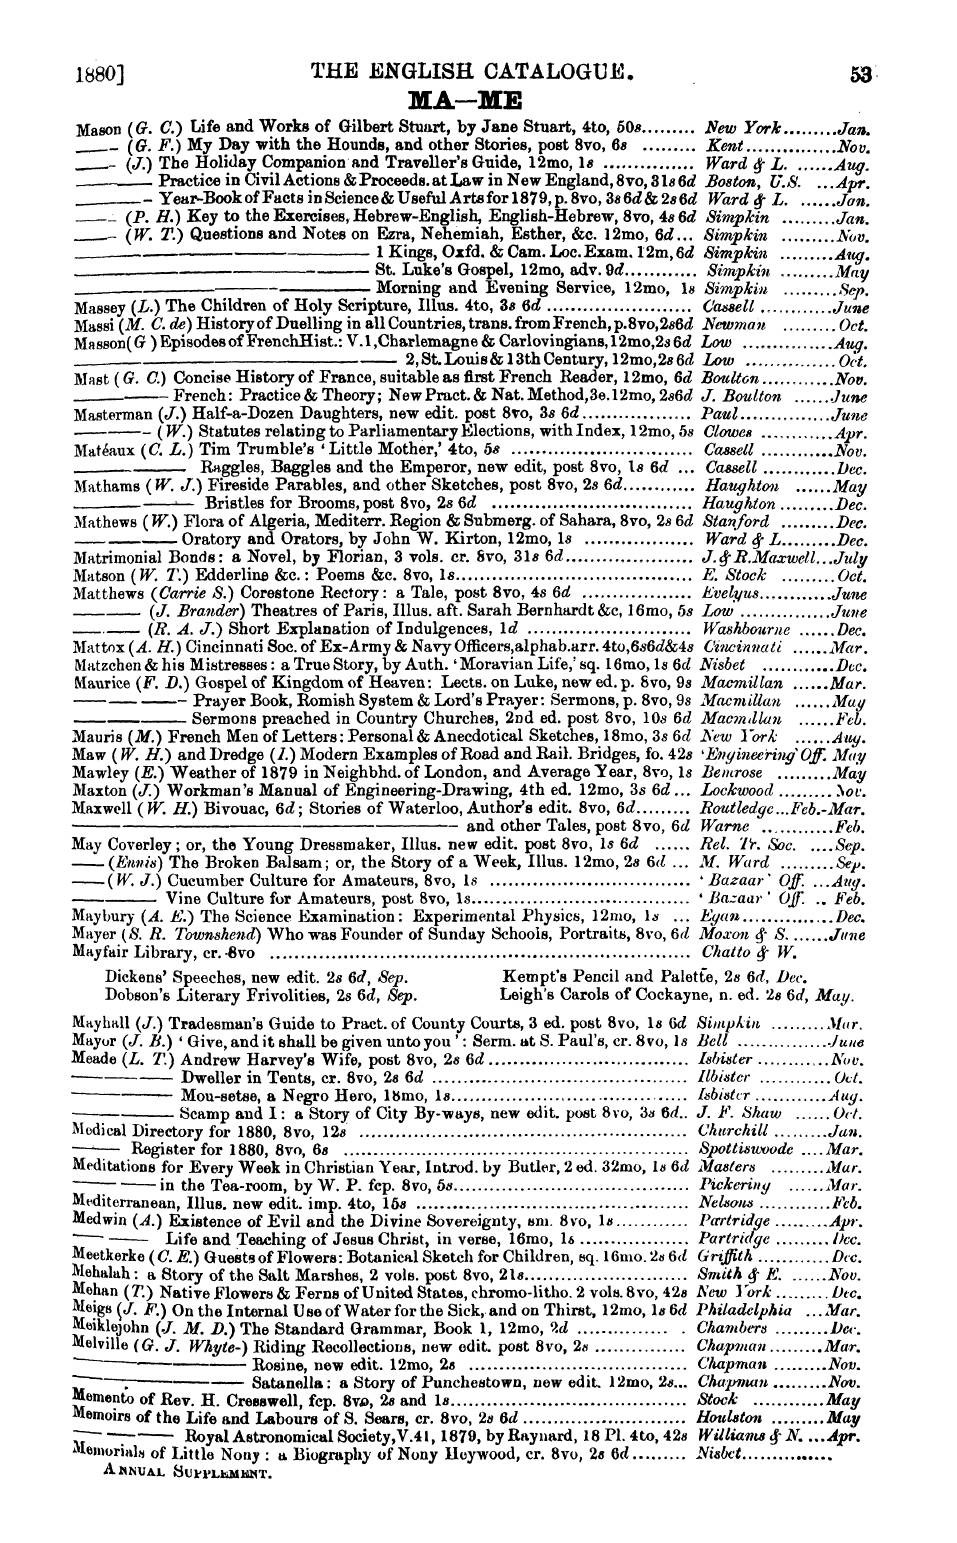 Publishers’ Circular (1880-1890): jS F Y, 1st edition: 56